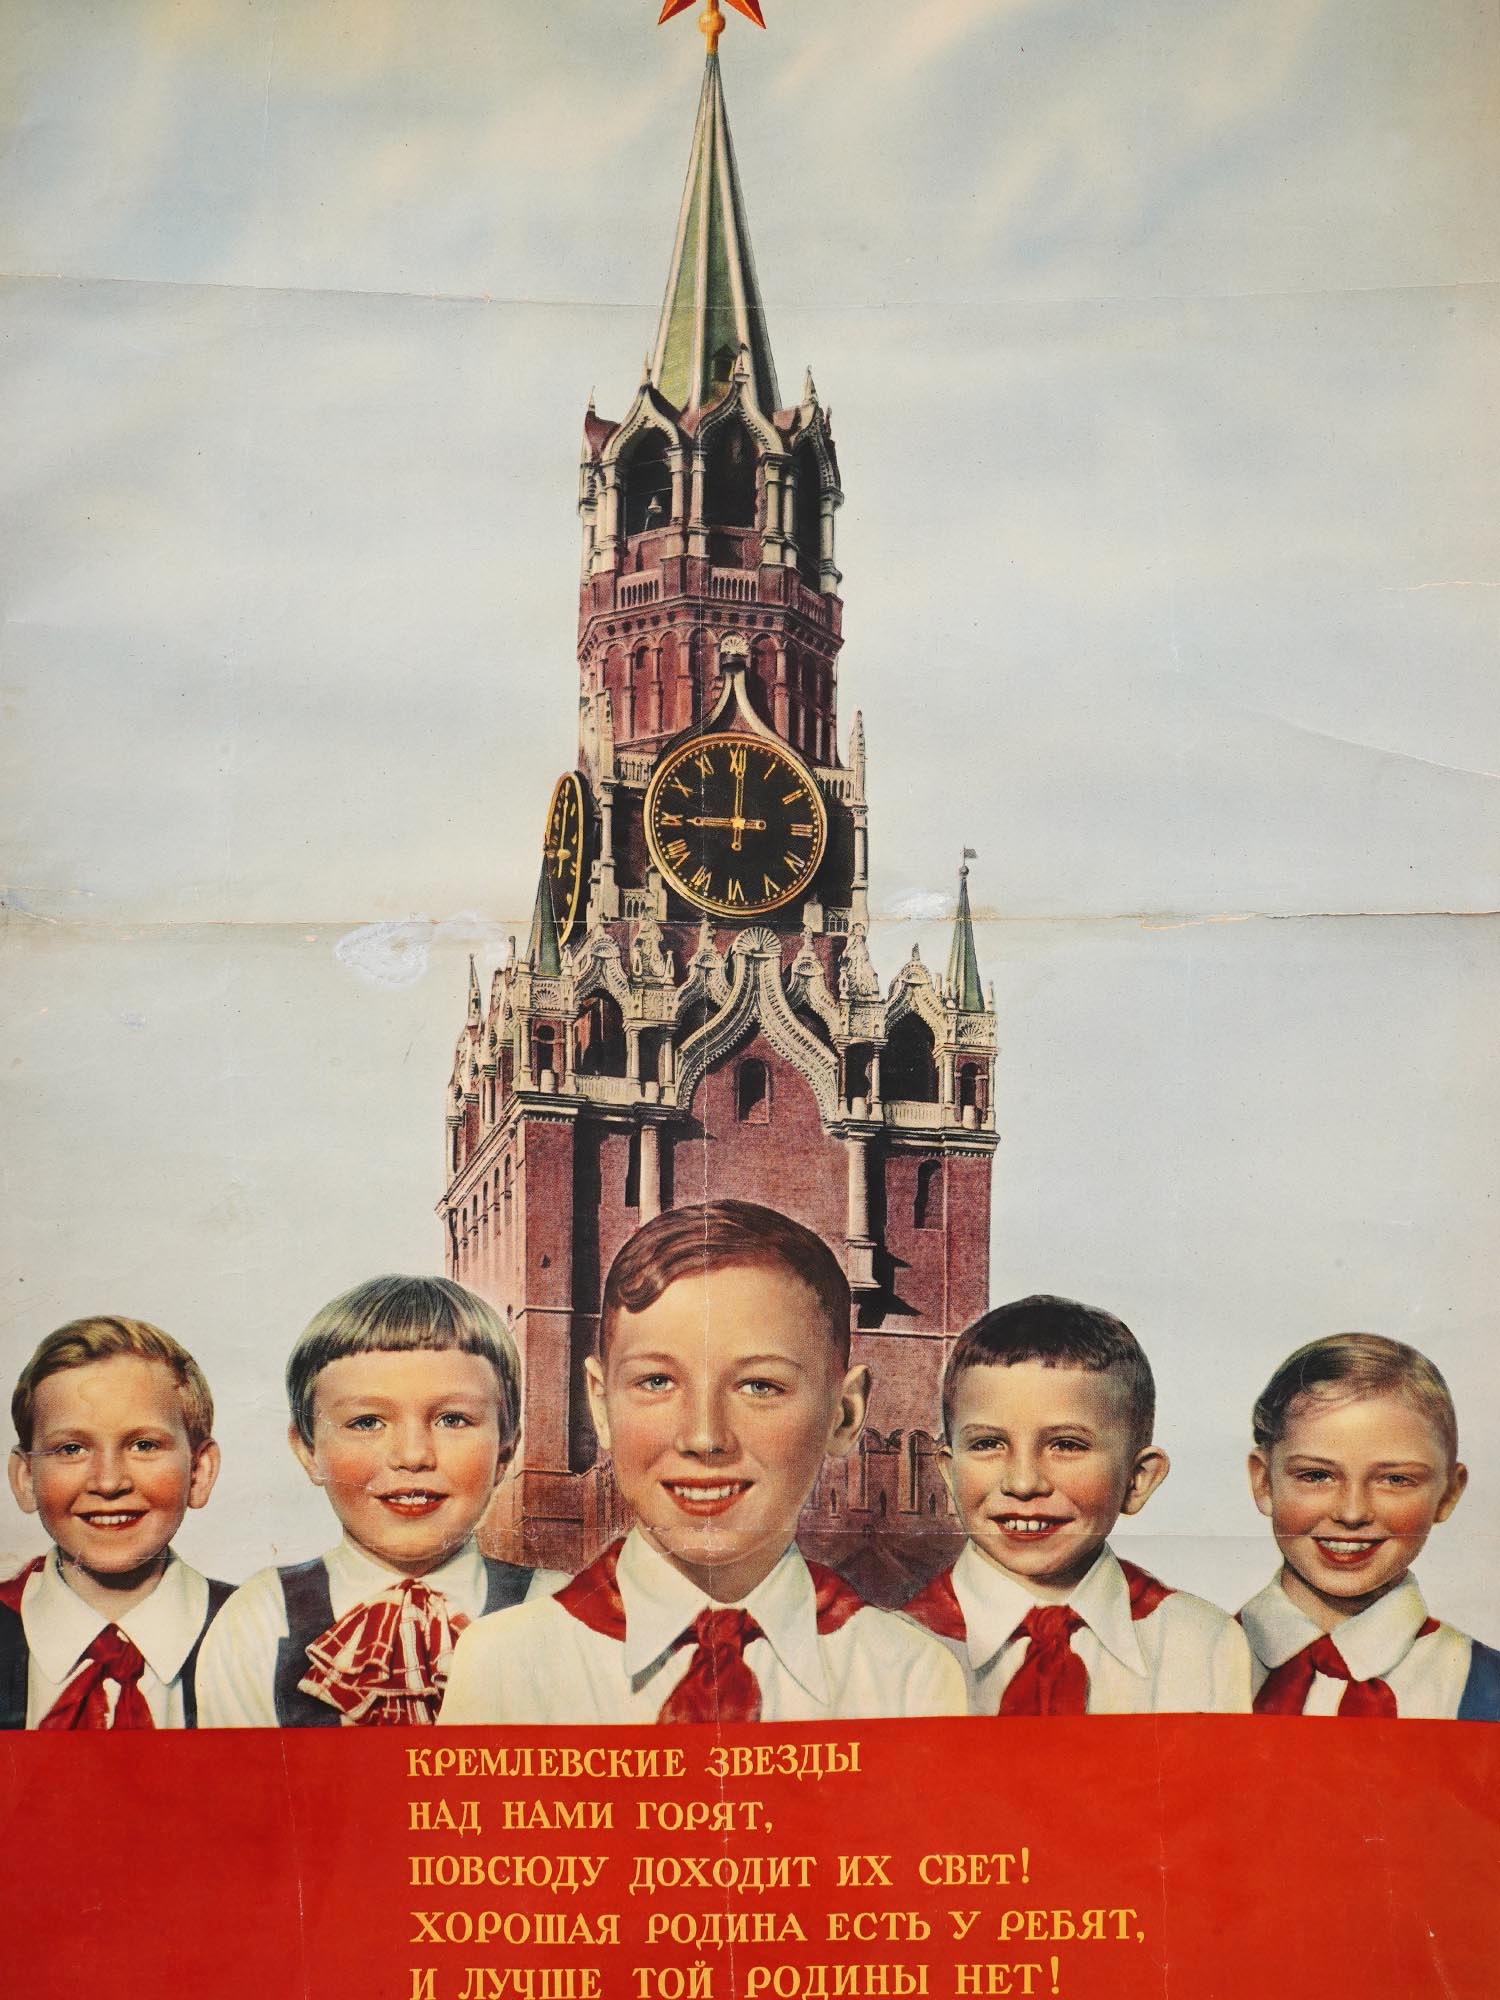 RUSSIAN SOVIET PROPAGANDA POSTER CHILDREN AND KREMLIN PIC-1